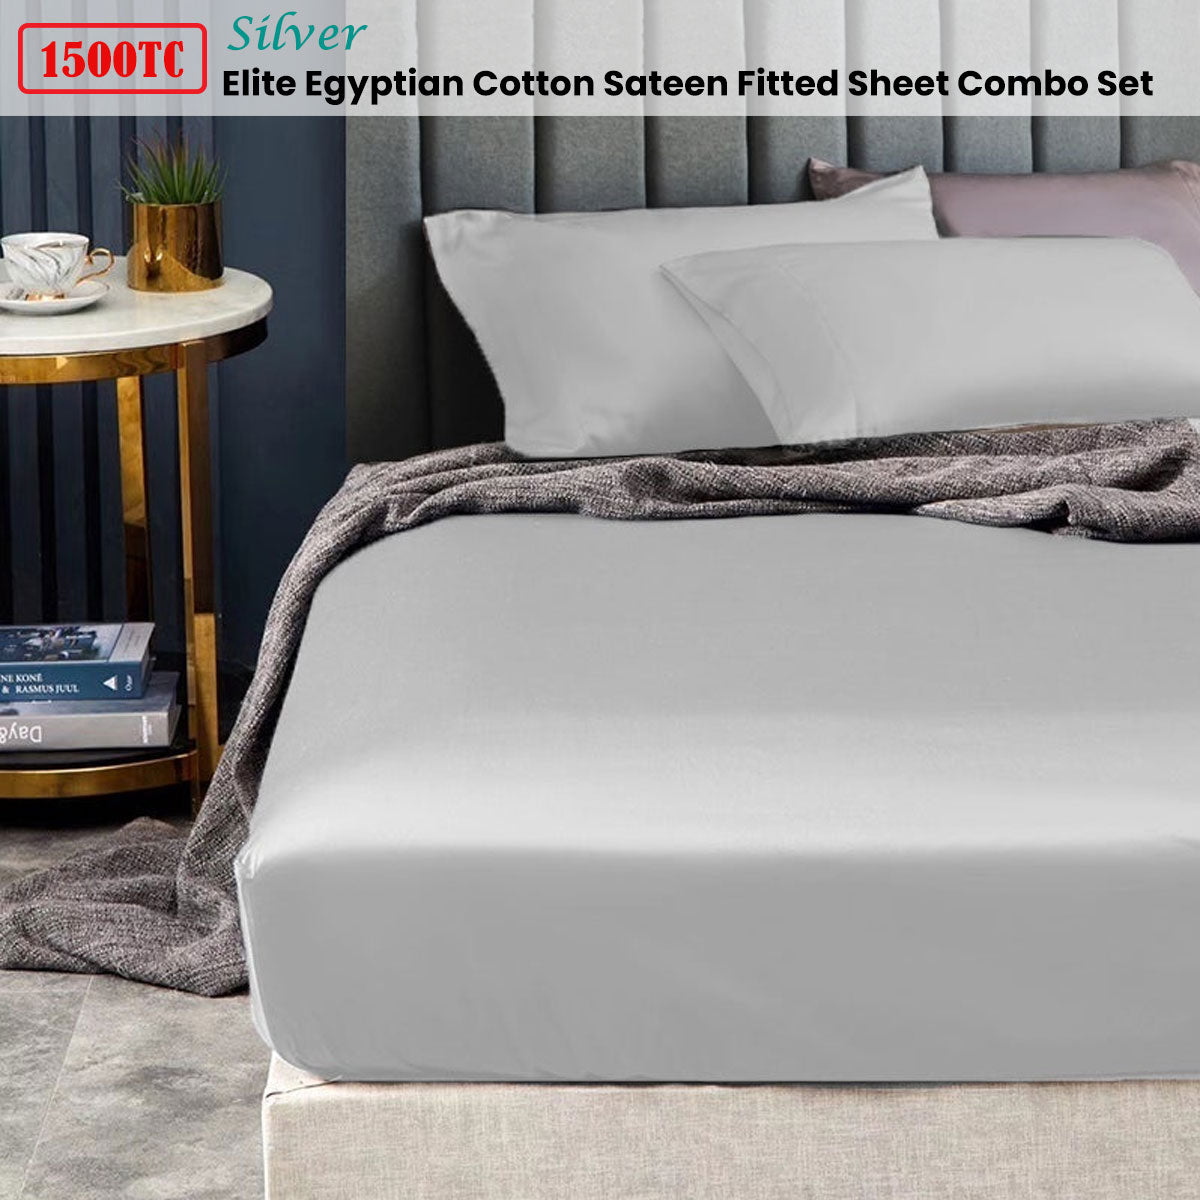 1500TC Elite Egyptian Cotton Sateen Fitted Sheet Combo Set Silver King Single